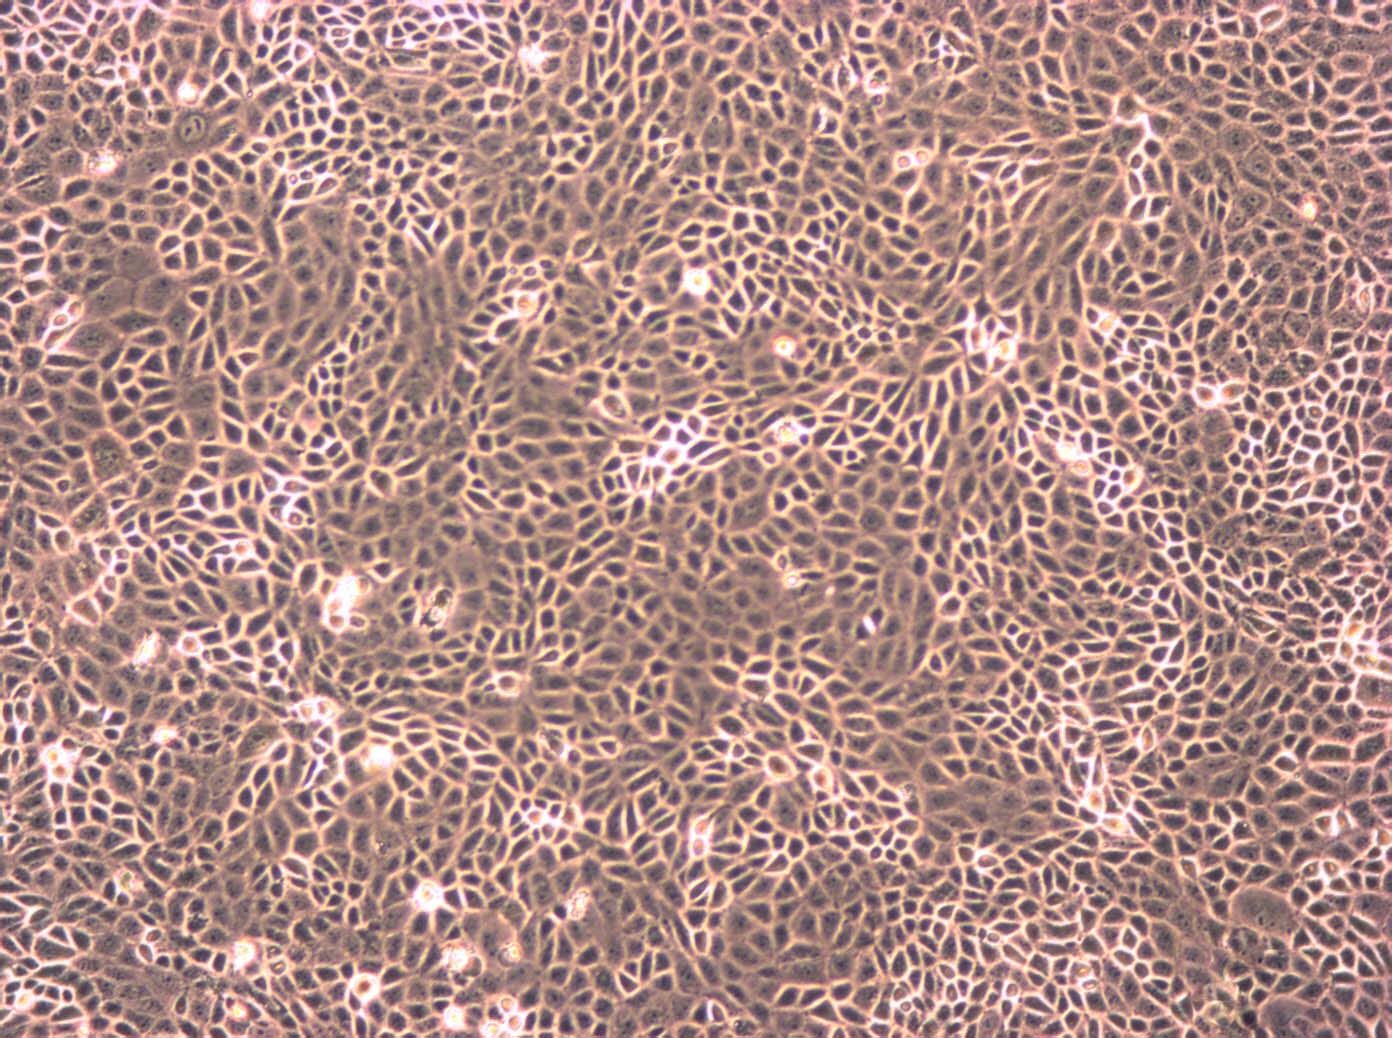 WEHI-164 epithelioid cells小鼠纤维肉瘤细胞系,WEHI-164 epithelioid cells